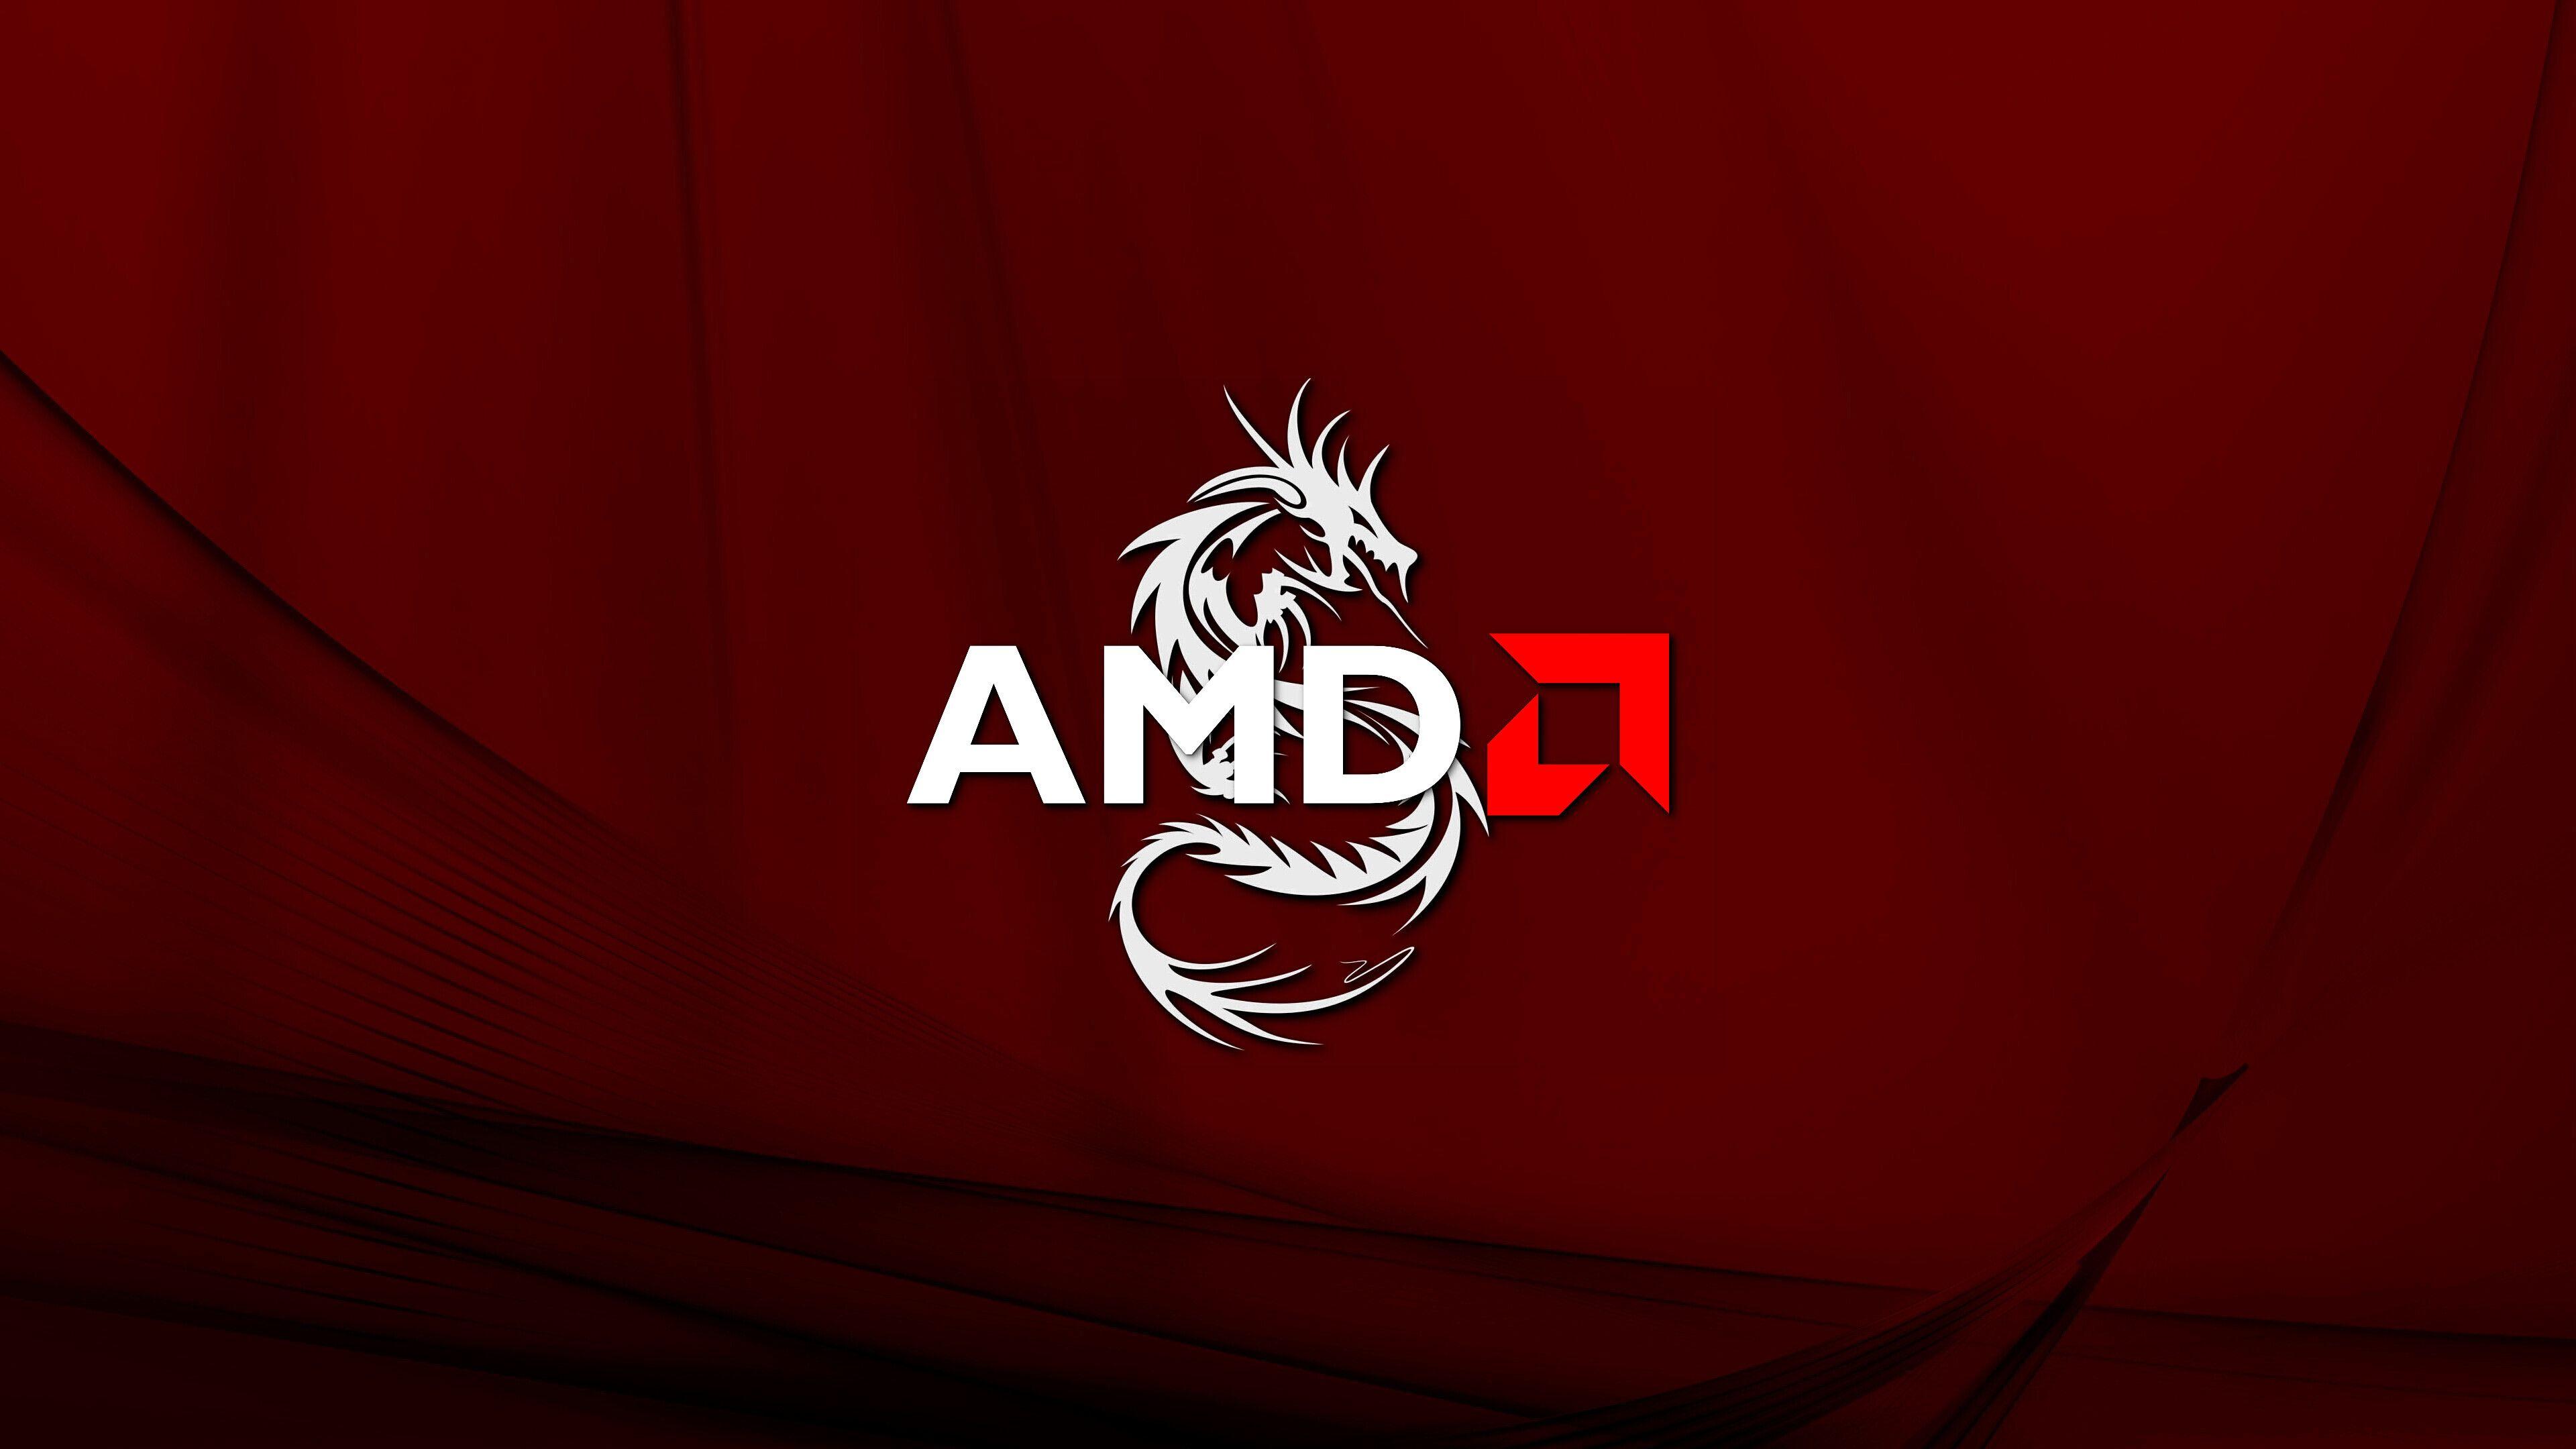 AMD 4K Logo - 76+ Amd 4K Wallpapers on WallpaperPlay